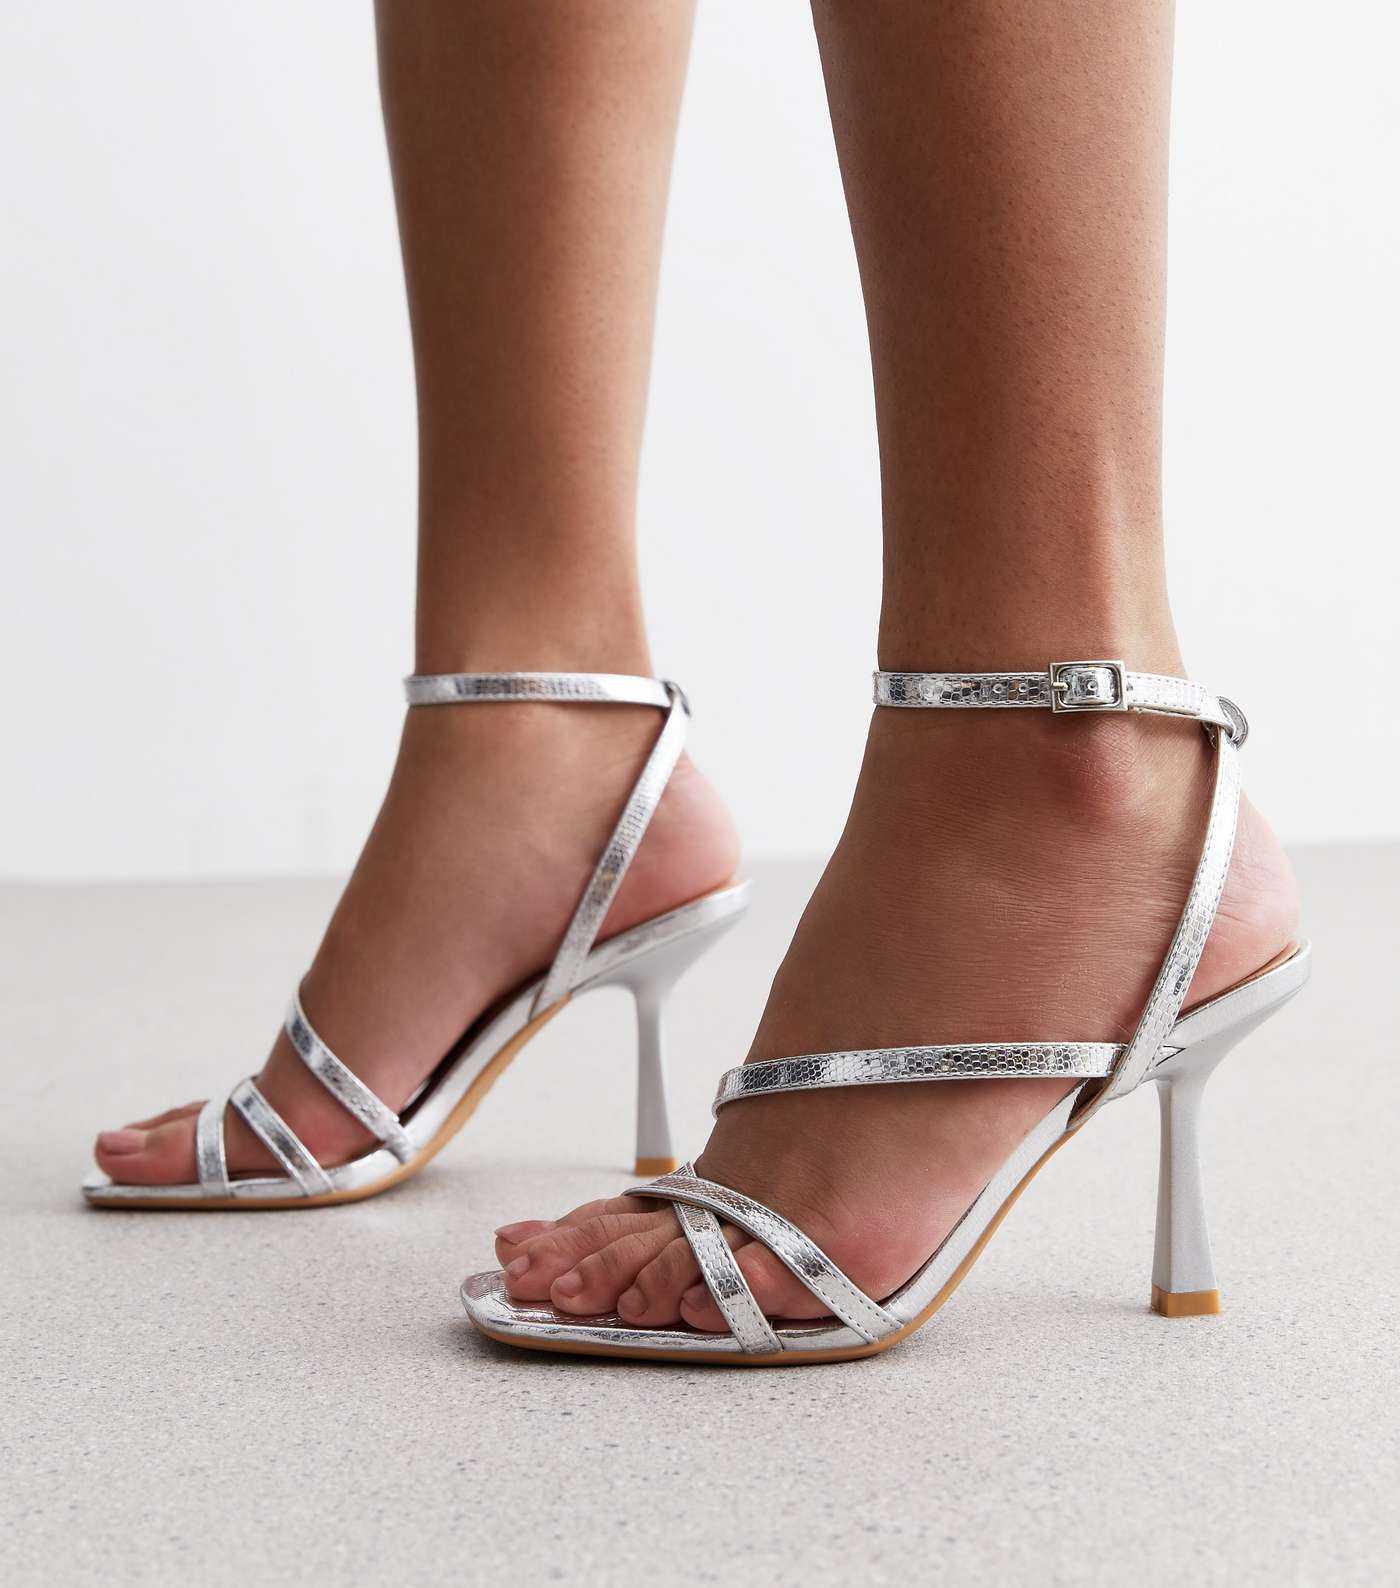 Silver Strappy Stiletto Heel Sandals Image 2